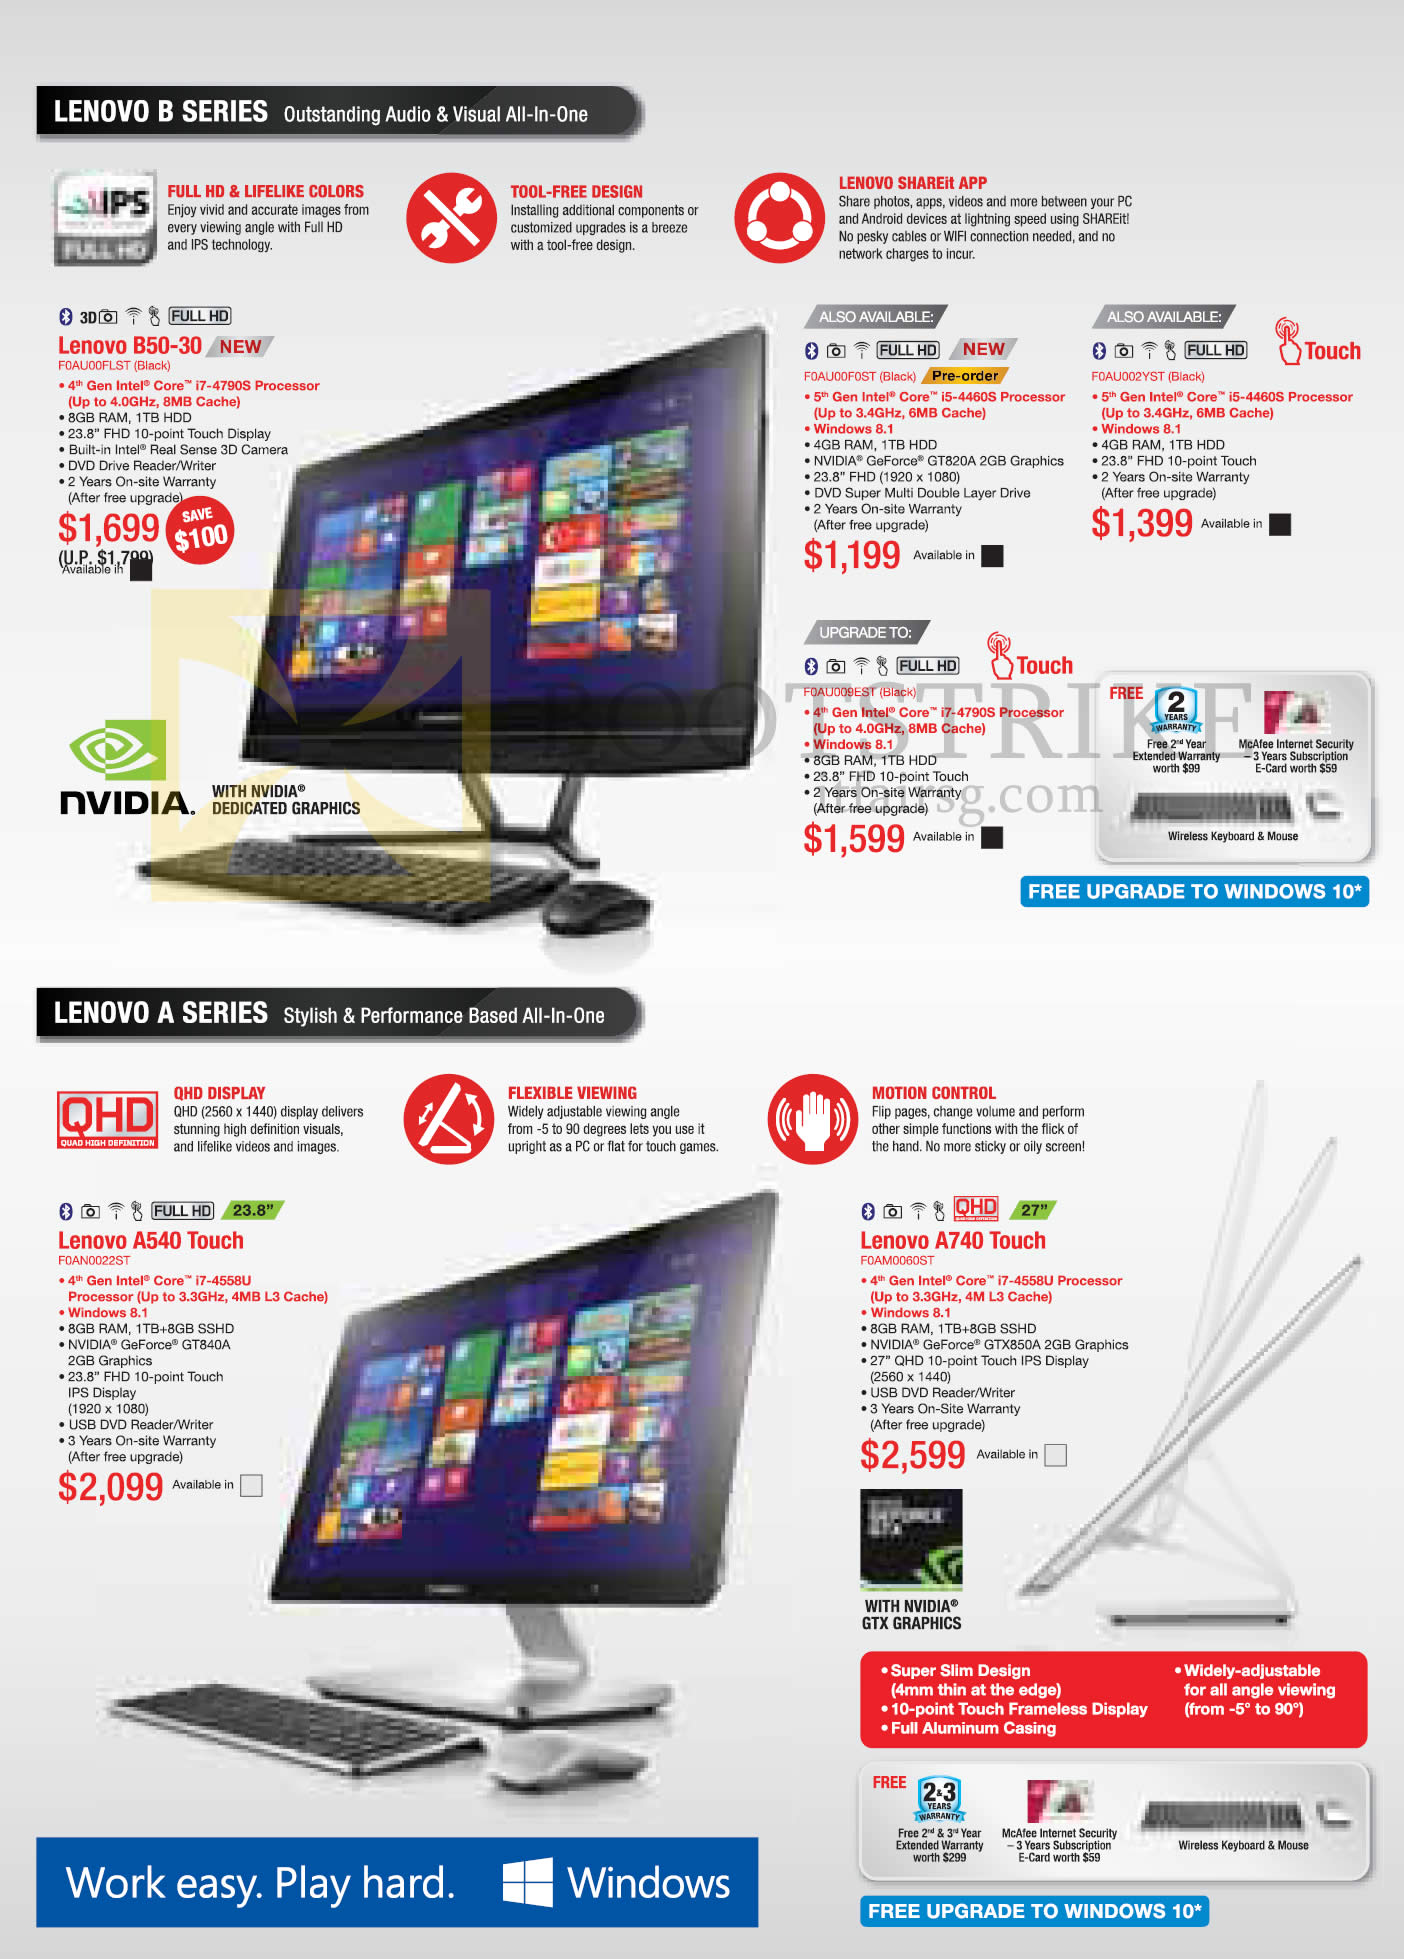 PC SHOW 2015 price list image brochure of Lenovo AIO Desktop PCs B50-30, A540 Touch, A740 Touch